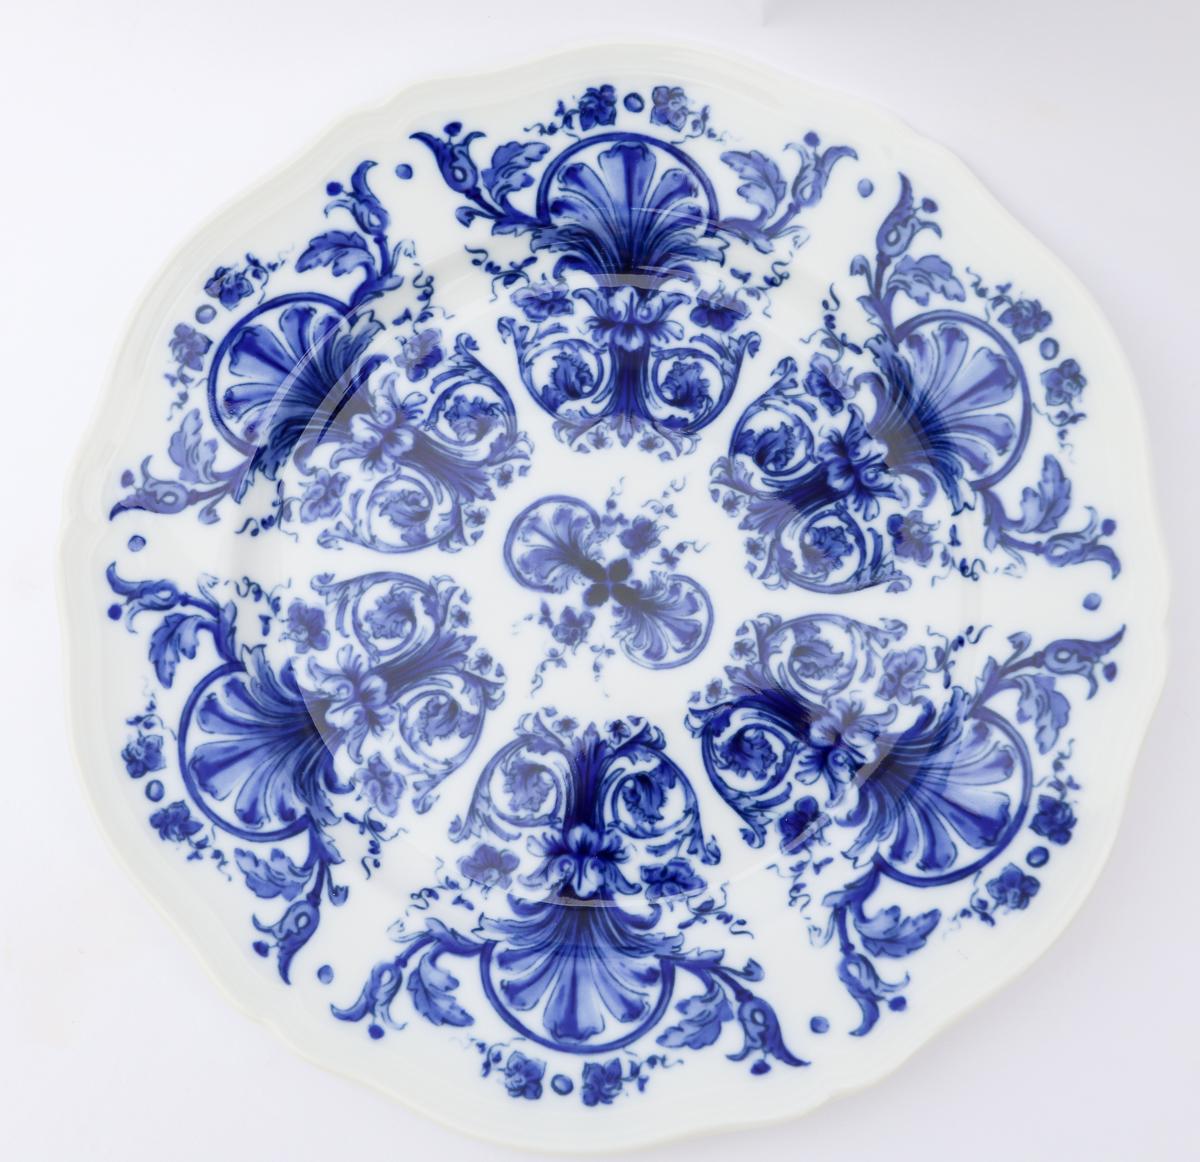 Richard Ginori babele blue dinner plate in the Antico Doccia shape, measures 26.5cm in diameter.

We can order the full line of Richard Ginori.